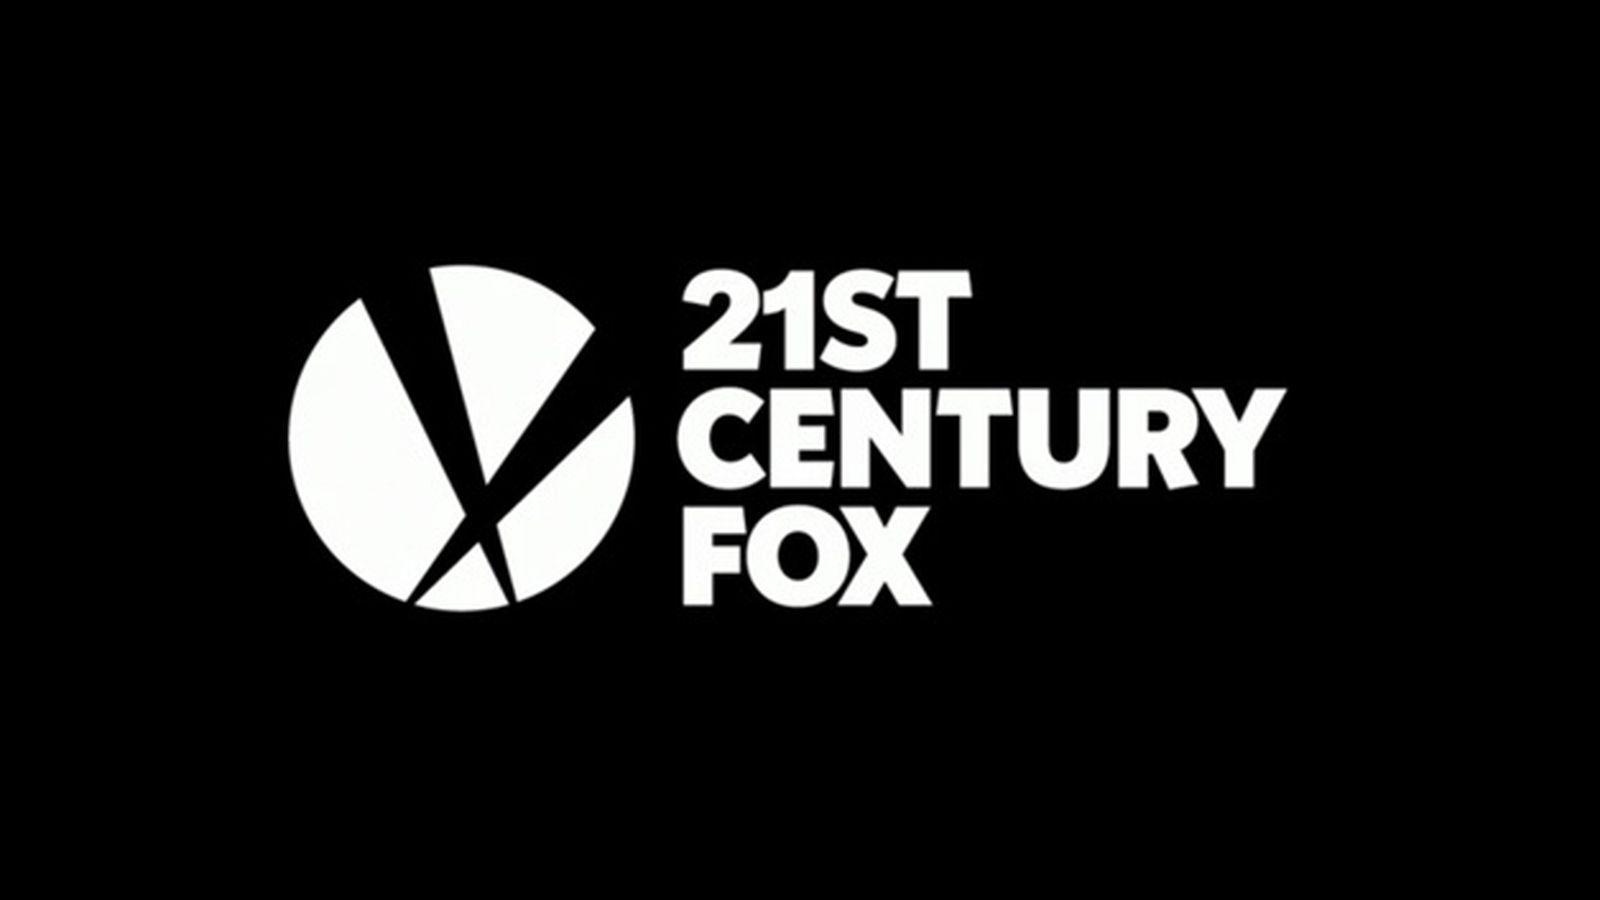 New Century Logo - 21st Century Fox logo unveiled ahead of News Corp split - The Verge